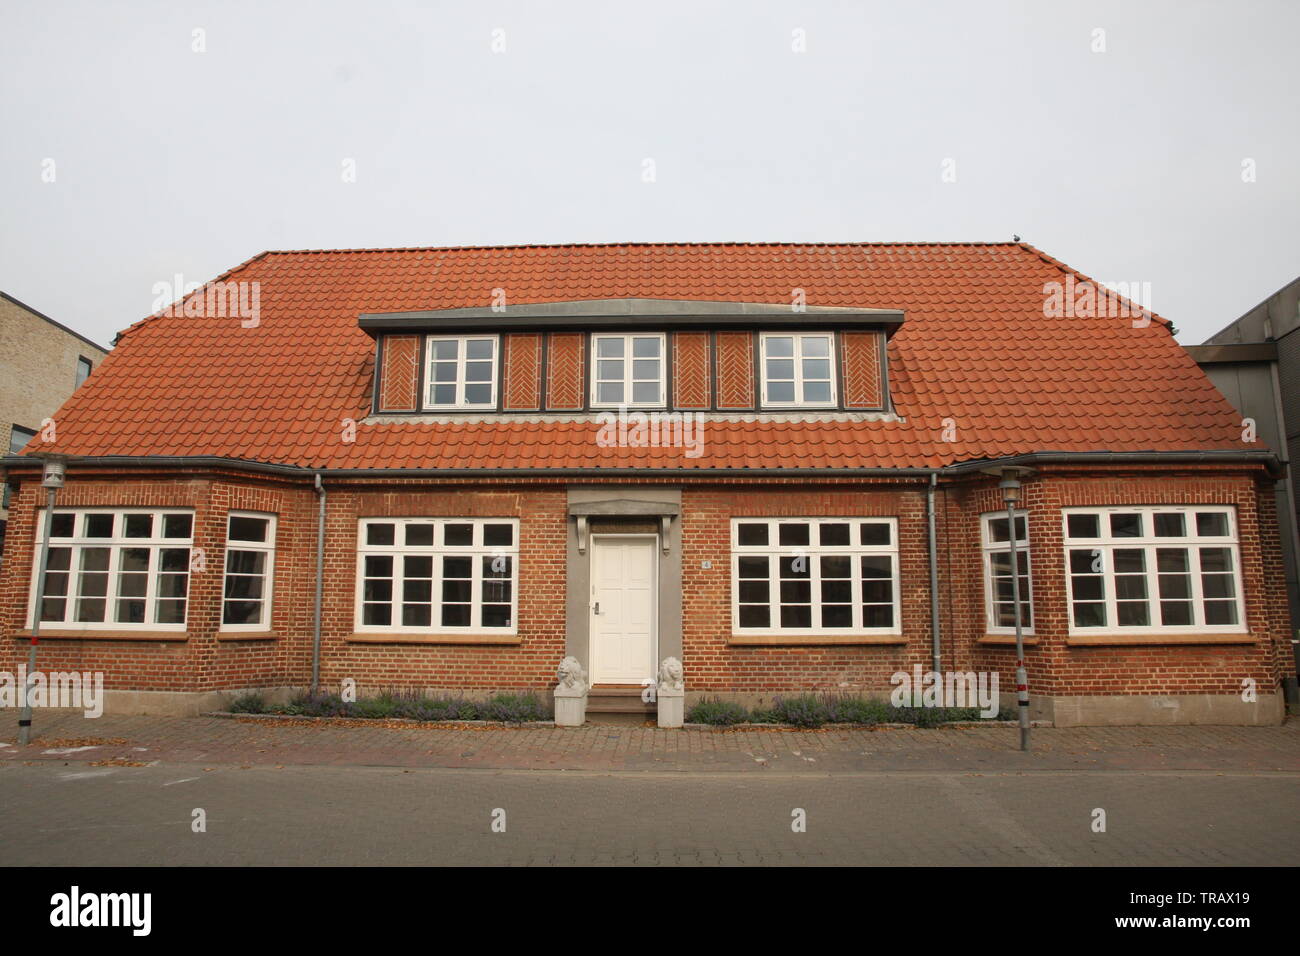 Kirk's house Billund, Denmark Photo Alamy